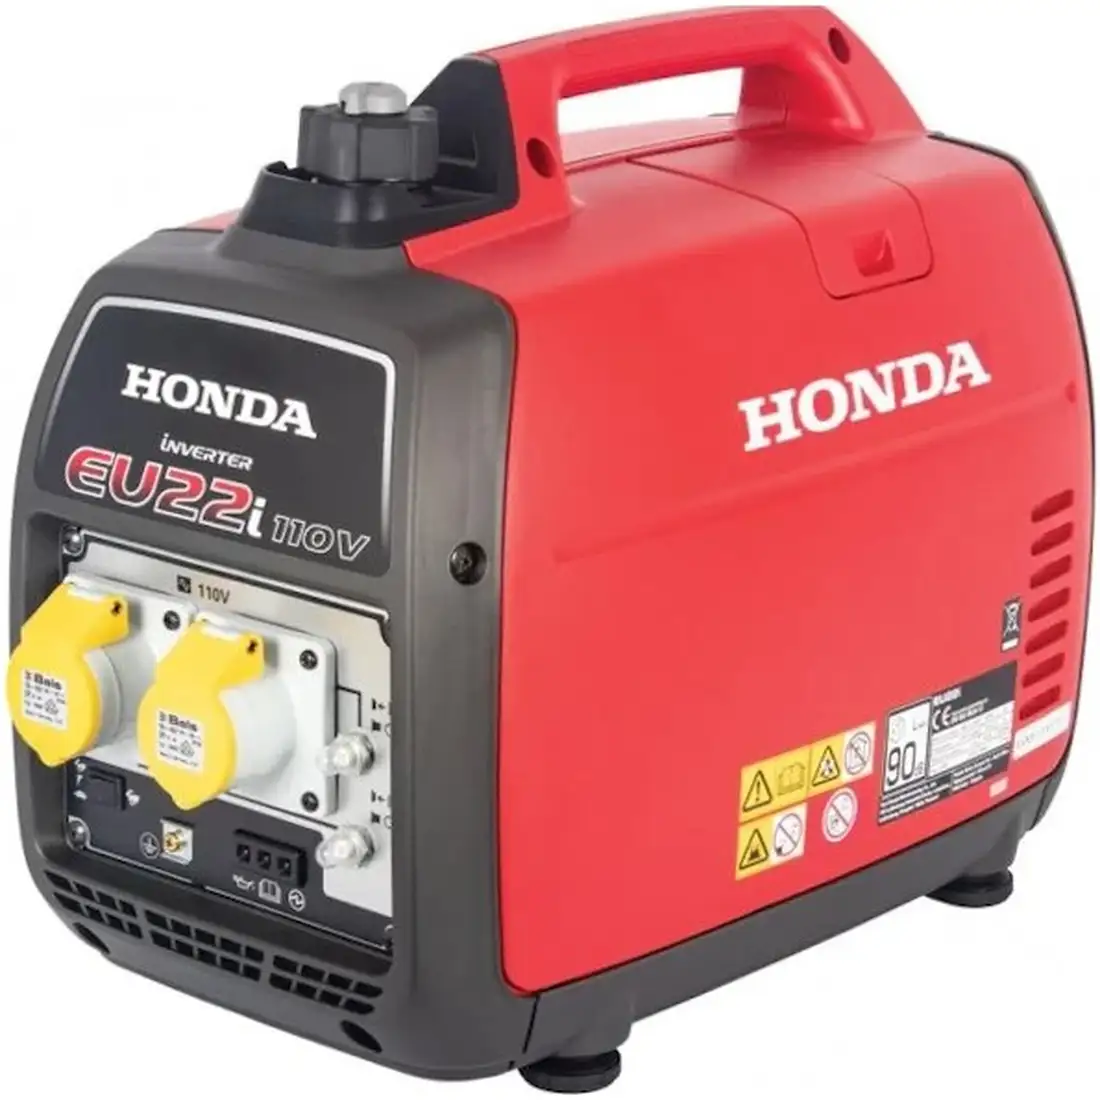 Honda EU22i-110V Petrol Inverter Generator